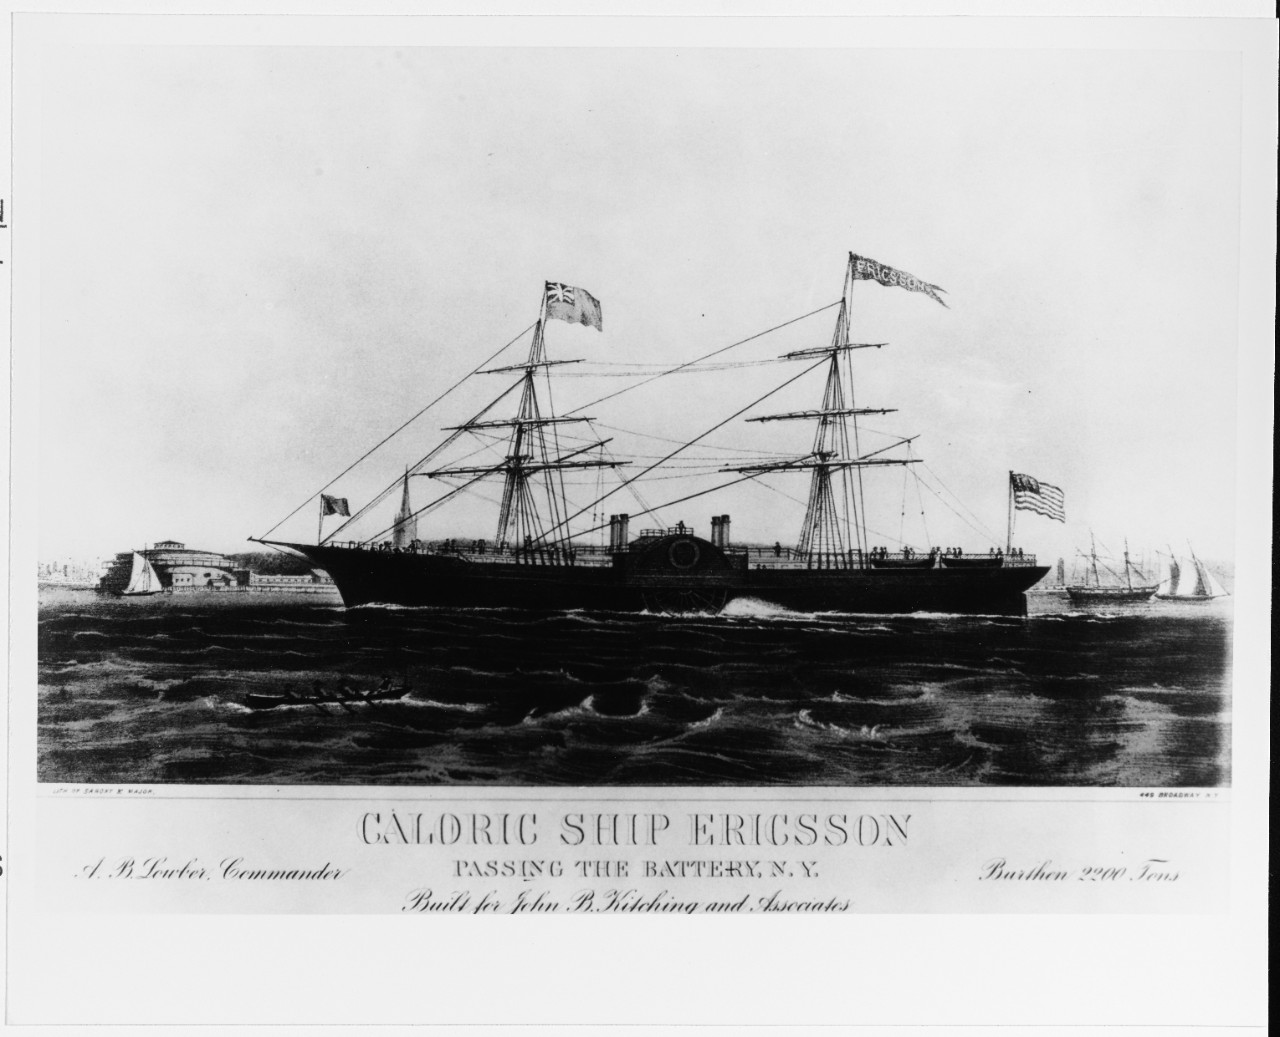 Caloric Ship ERICSSON